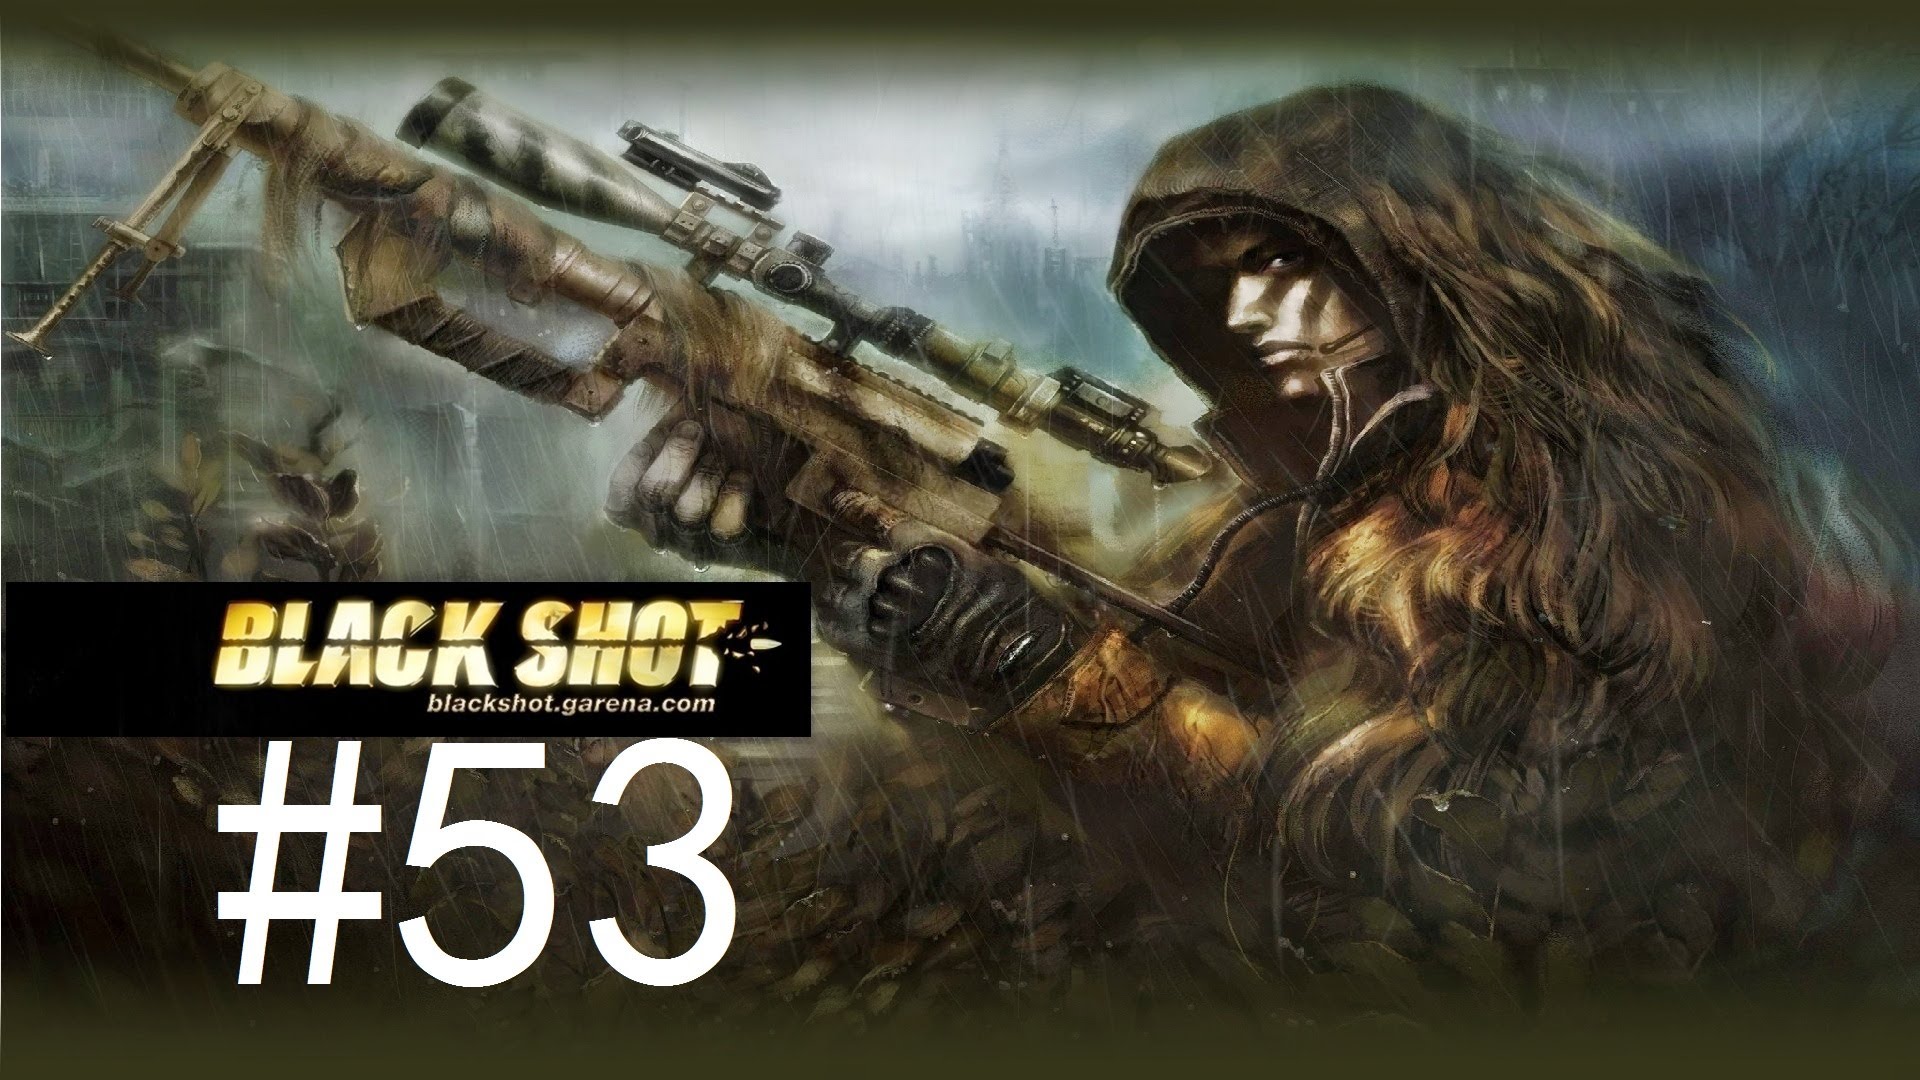 BlackShot #53 Rayne Char Running so Silent !! Shhhhs~~ - YouTube